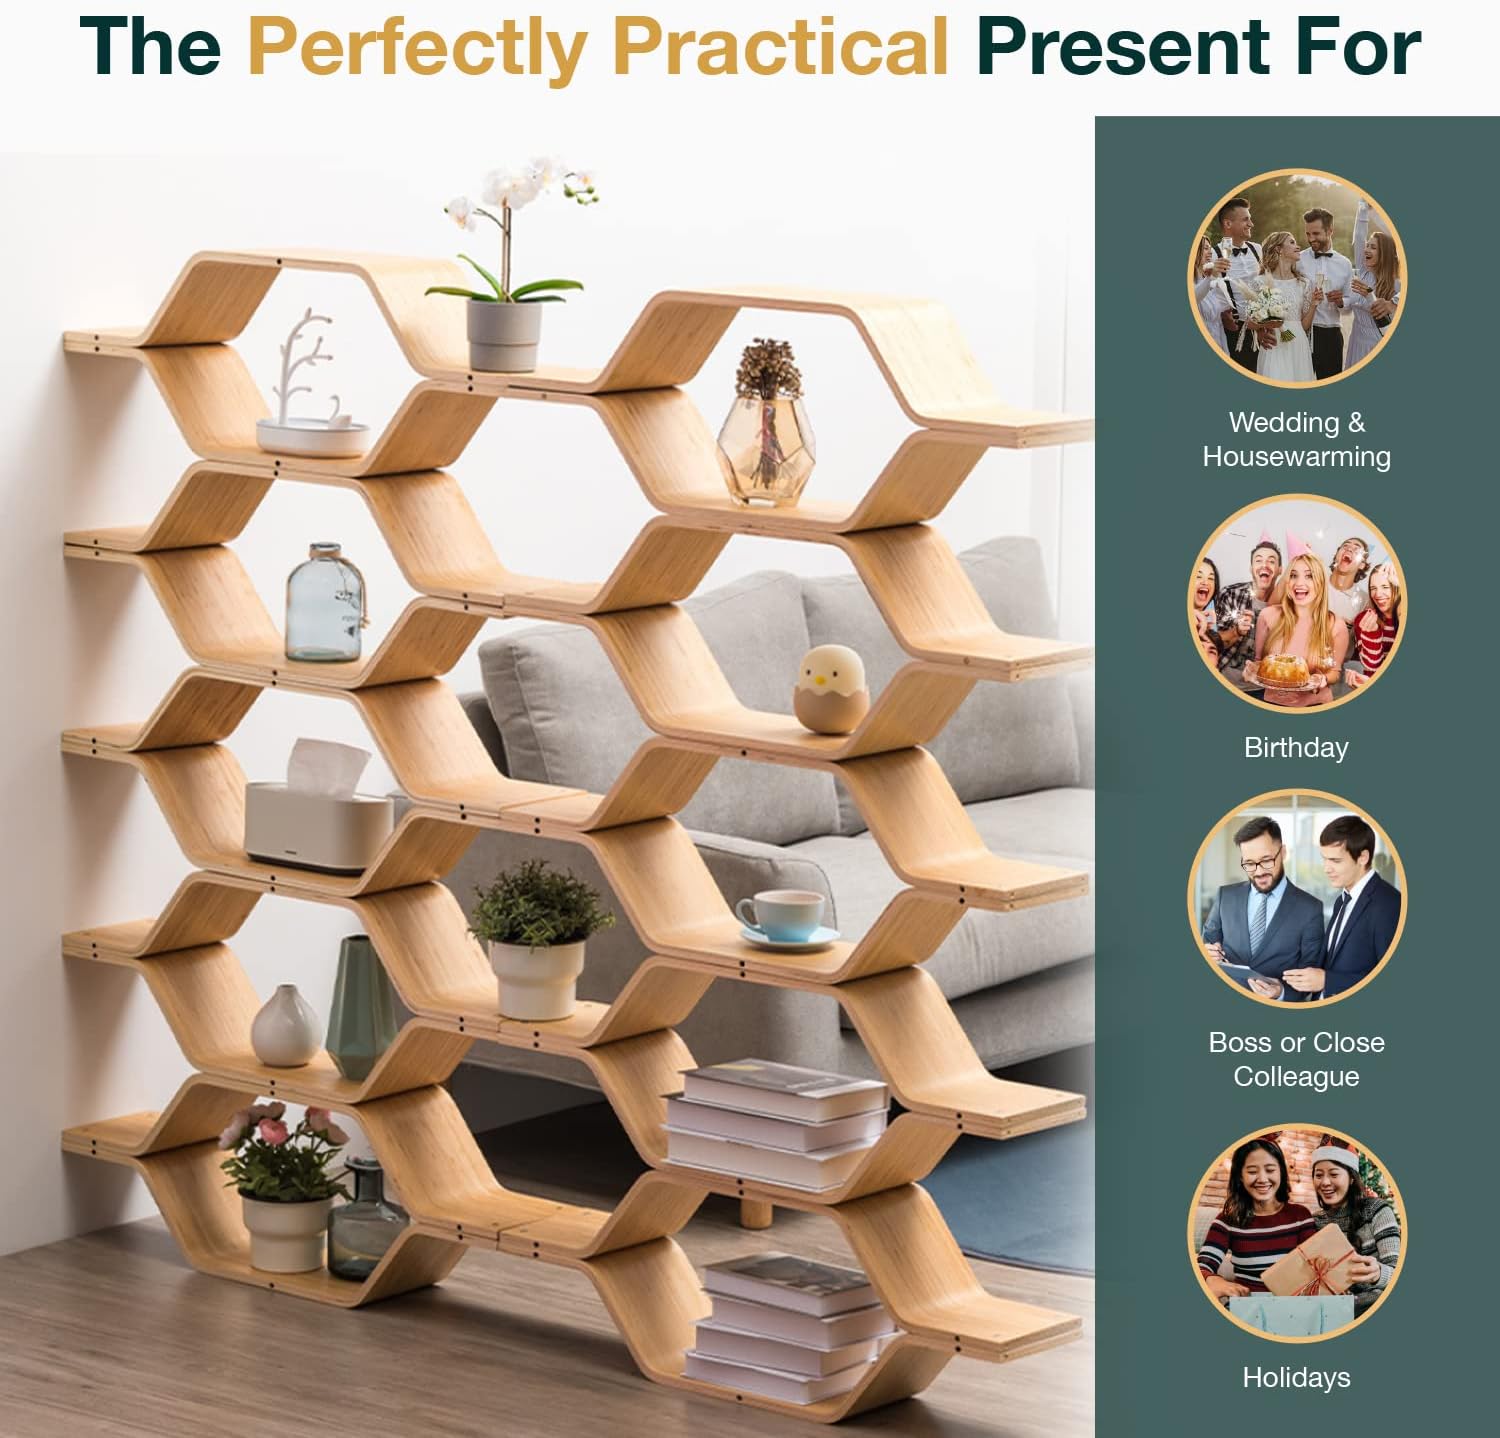 Load image into Gallery viewer, 6-Level Honeycomb Hexagon Shelving Set - 5ft Tall DIY Wood Shelves Slim Shelf Room Divider